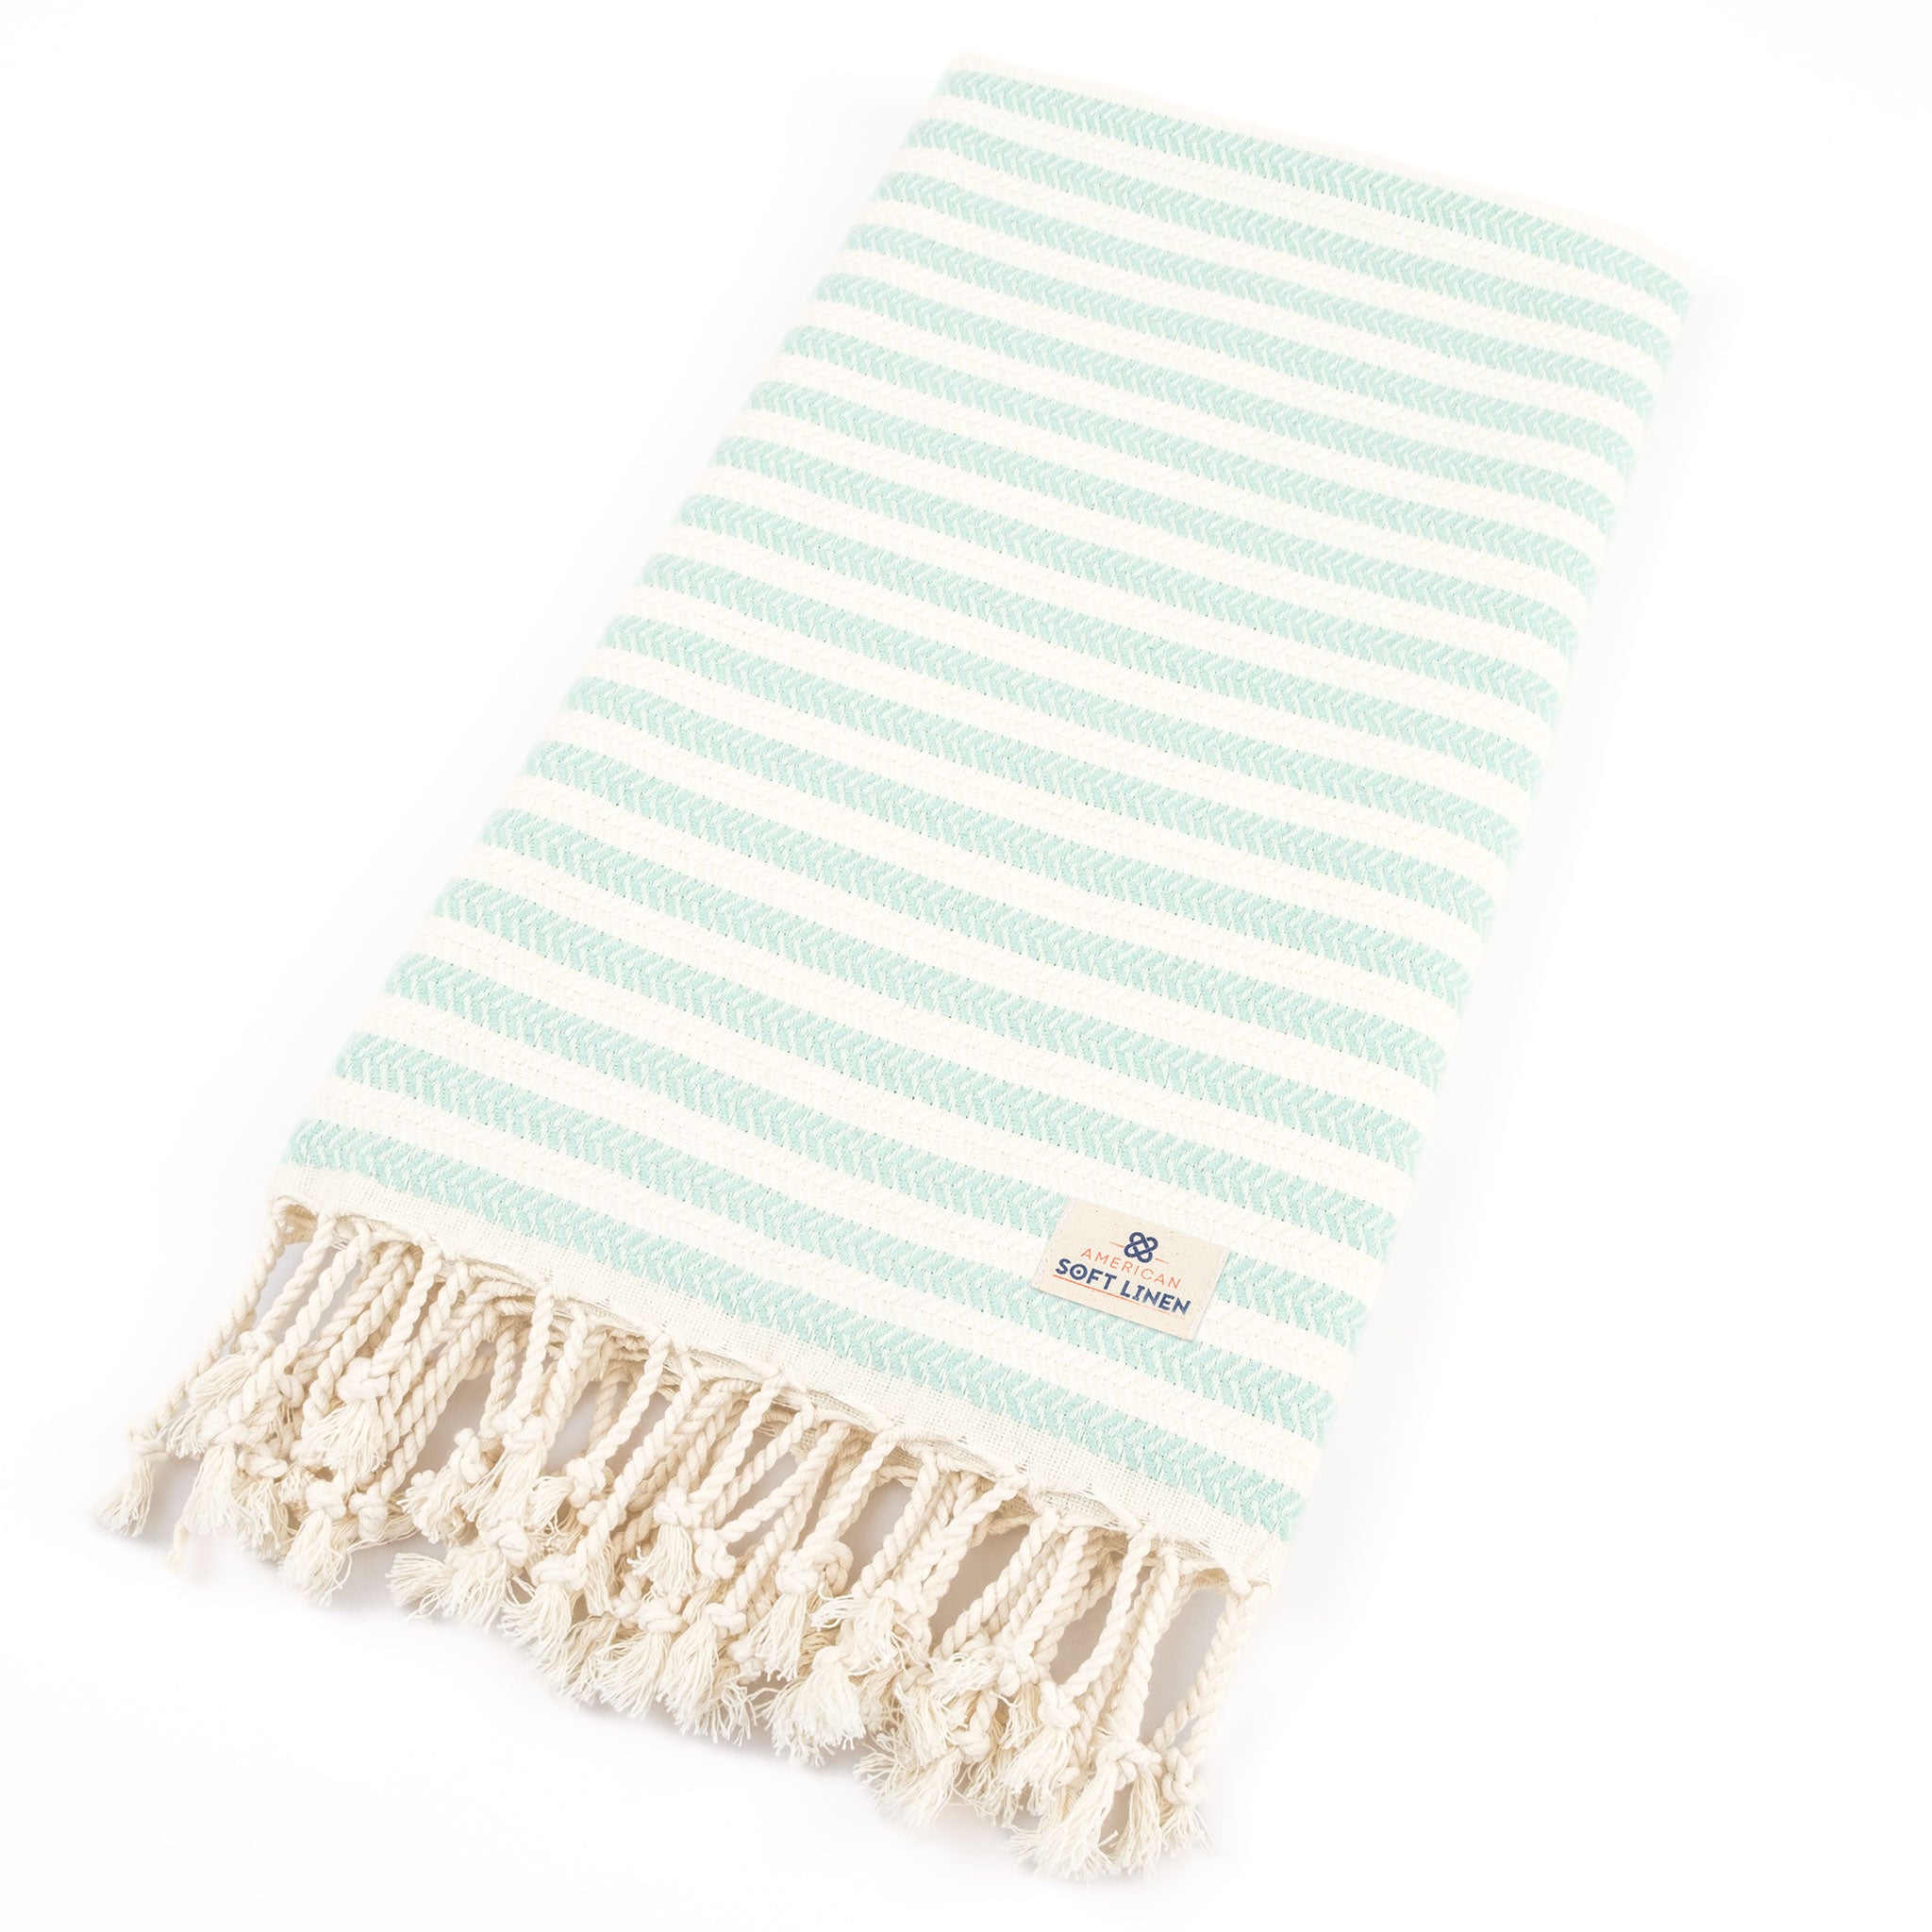 American Soft Linen - 100% Cotton Turkish Peshtemal Towels 40x70 Inches - Sage - 5